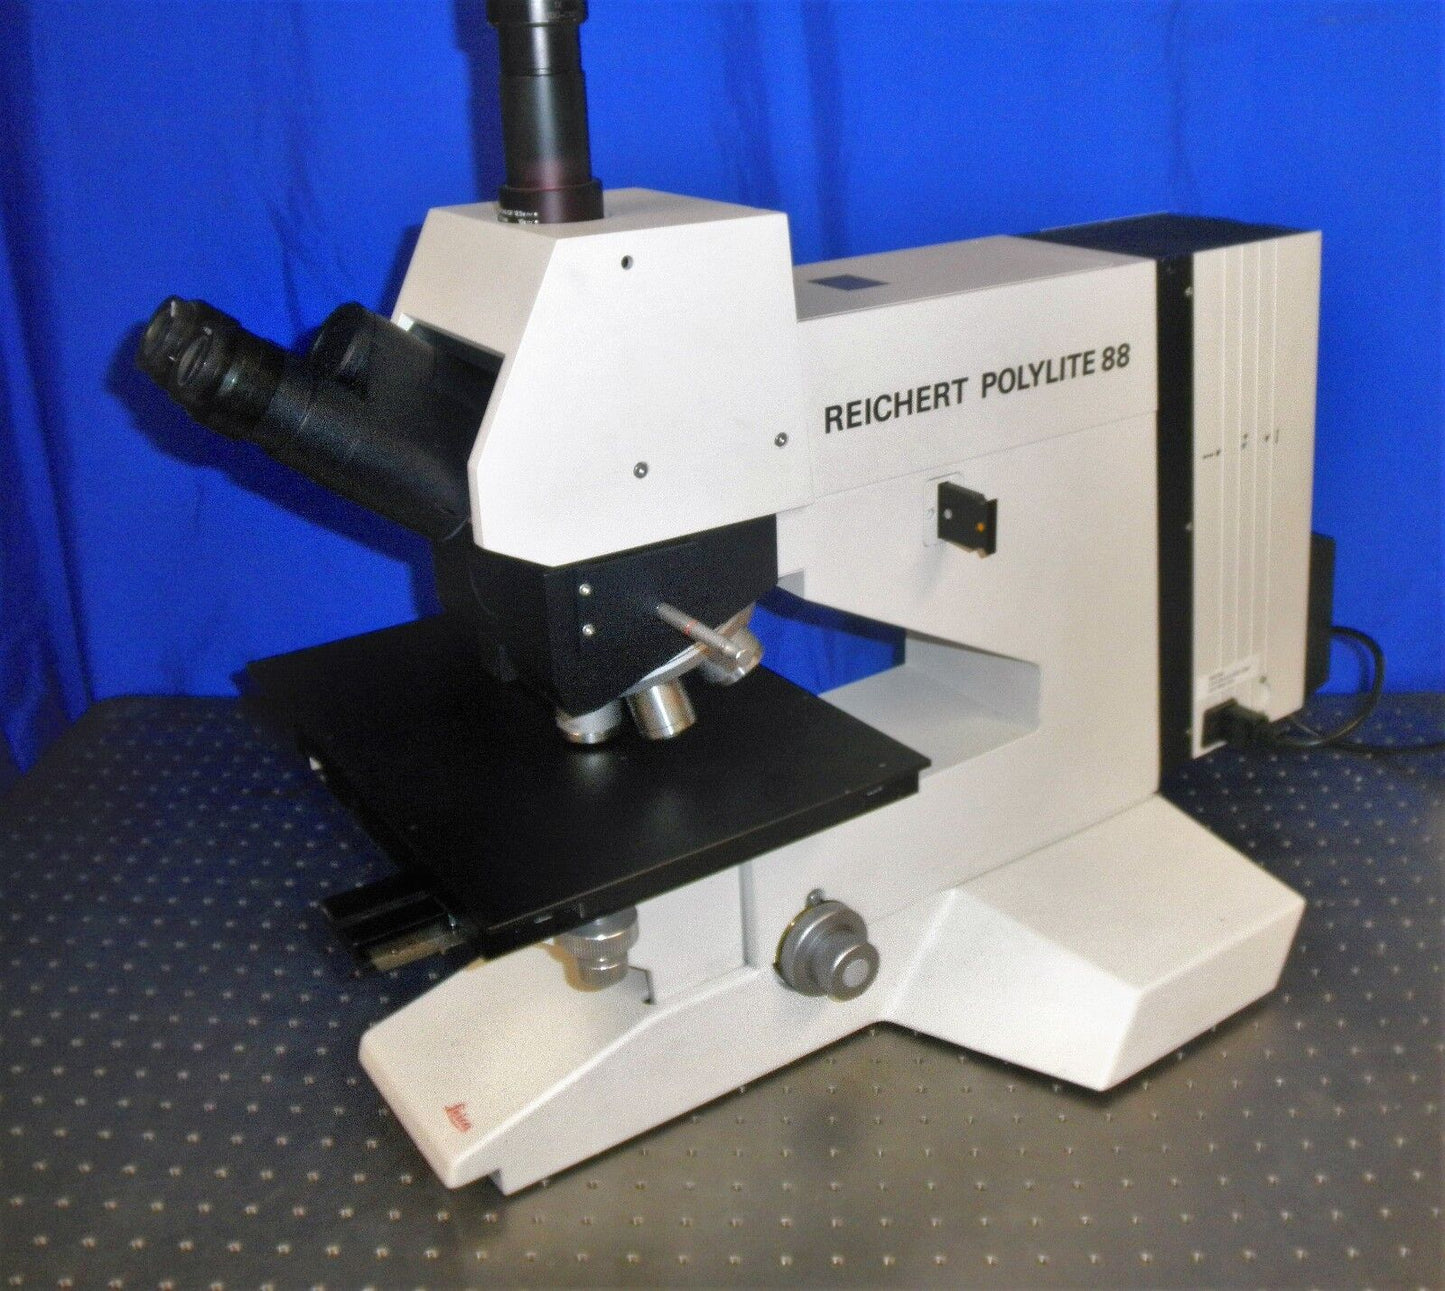 Leica Reichert Polylite 88 Nomarski DIC BF/DF 200mm wafer microscope